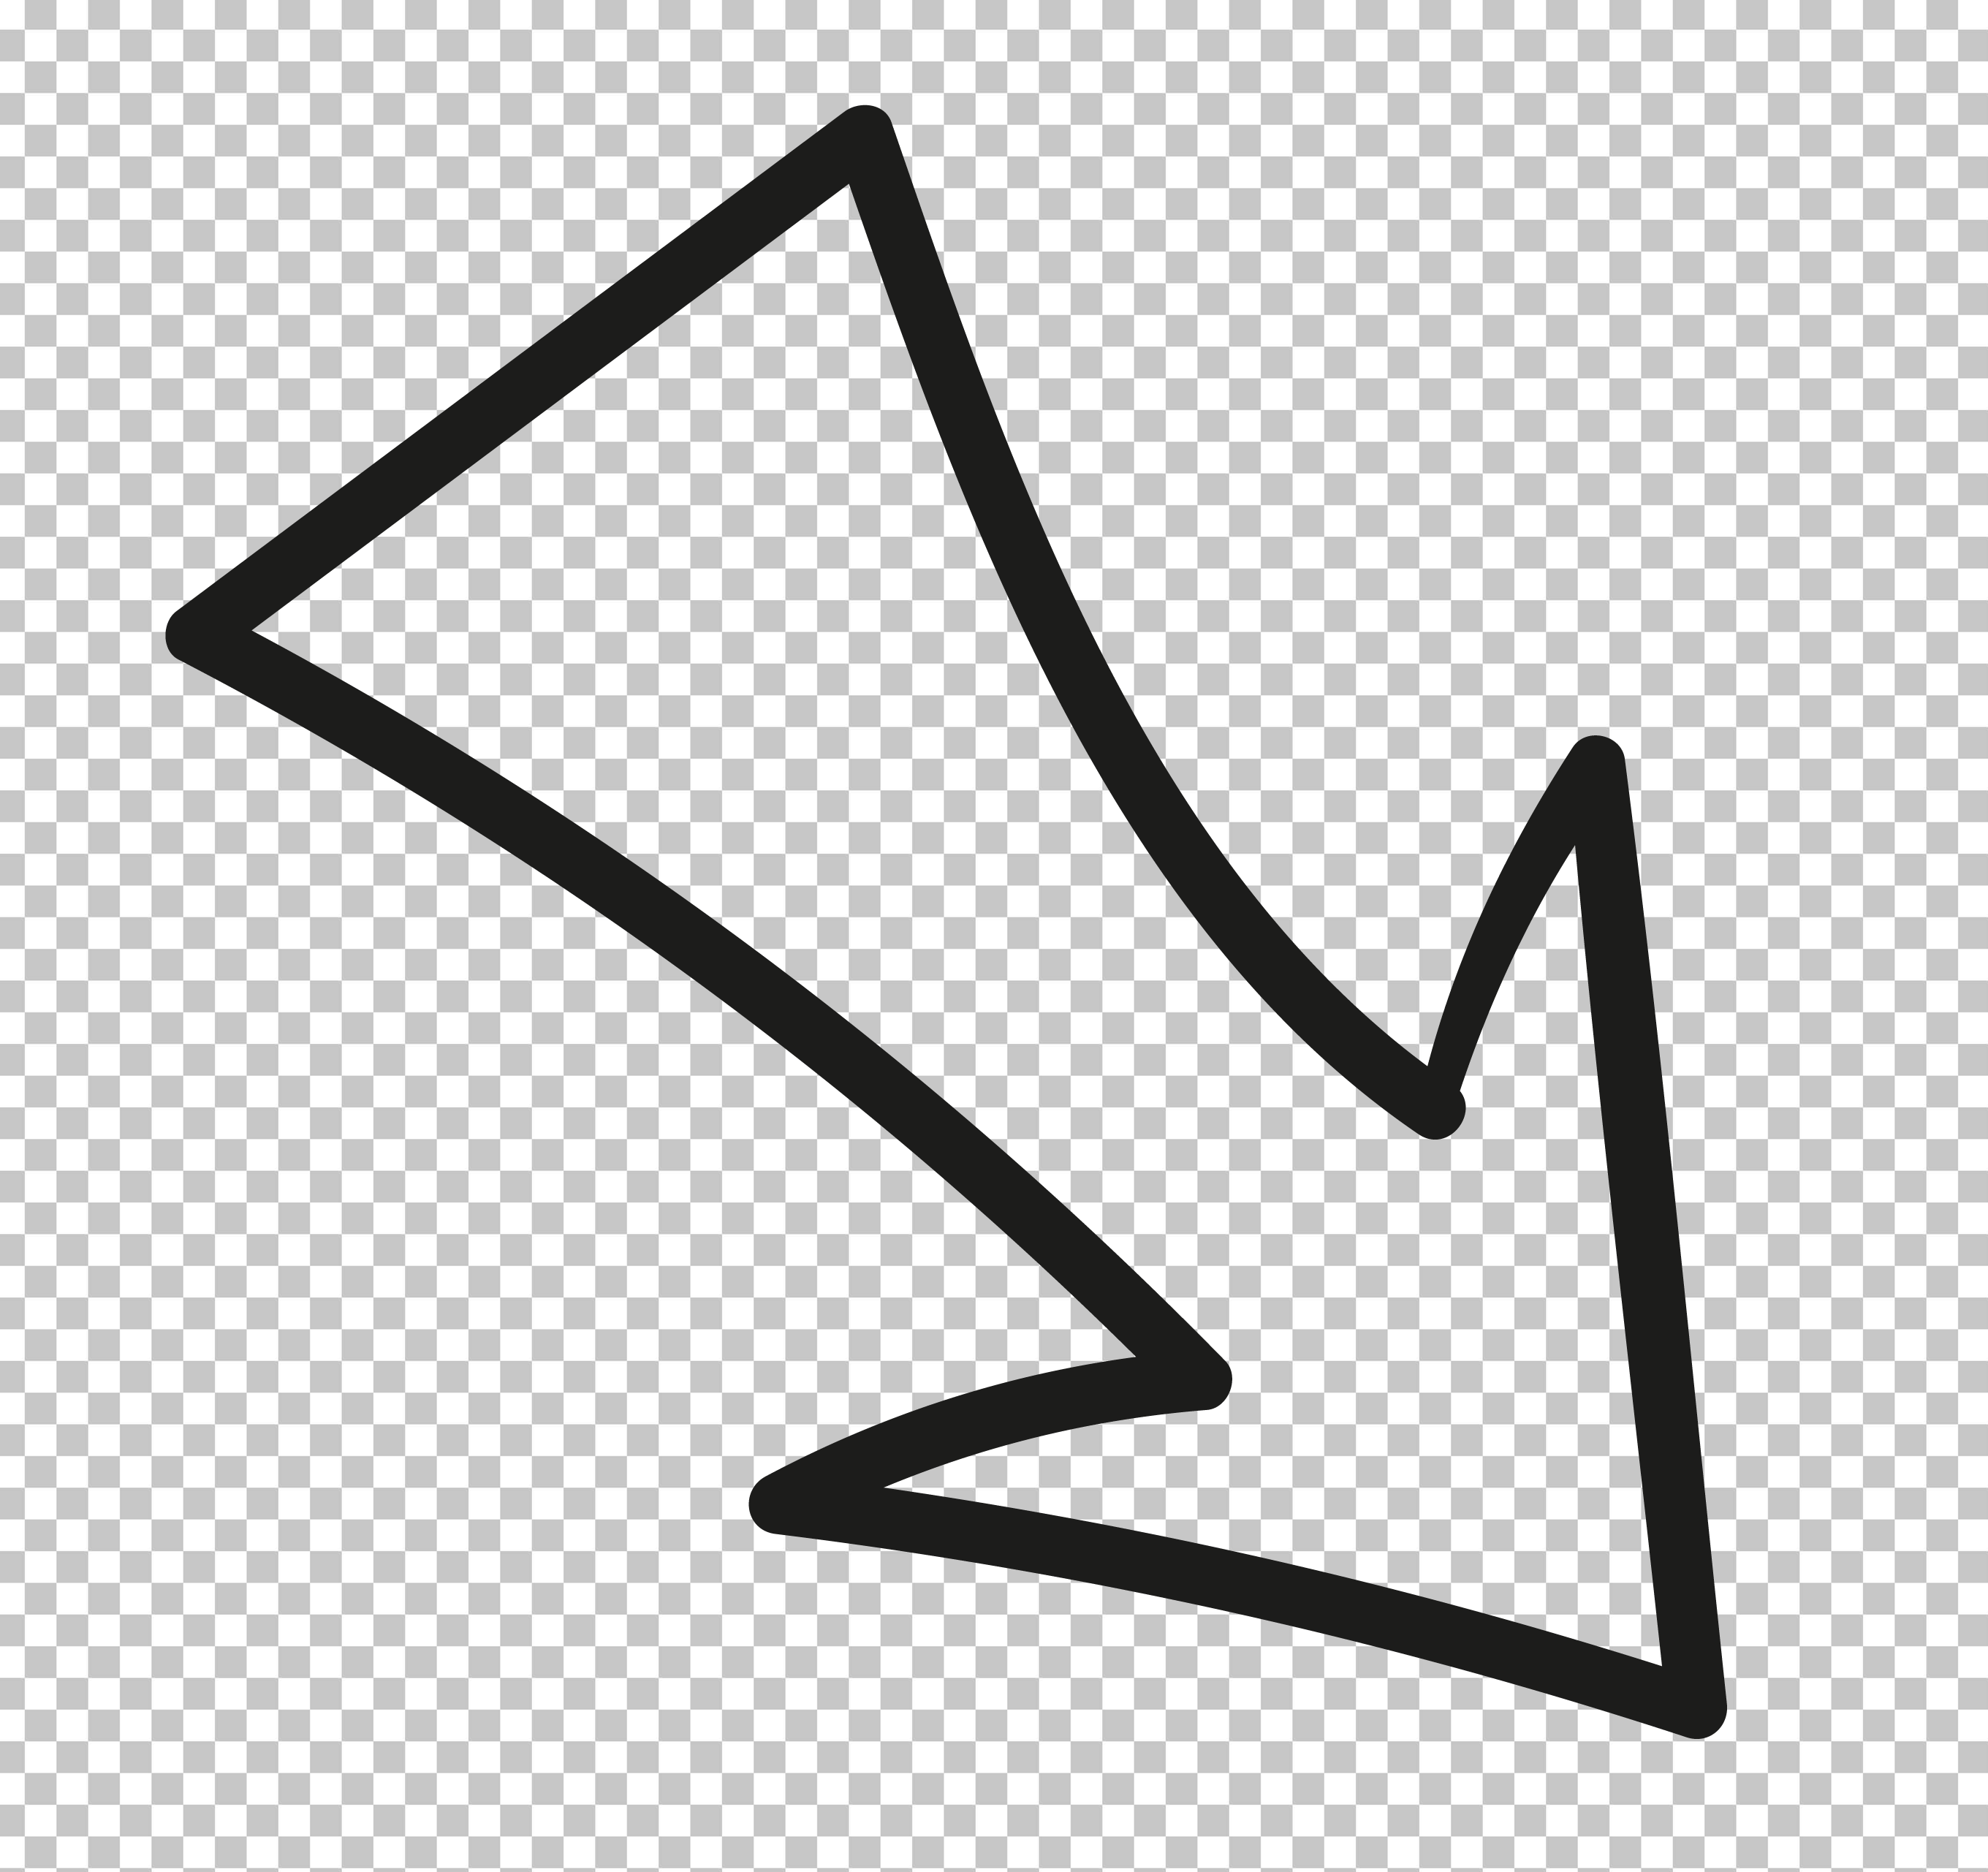 drawn arrow png